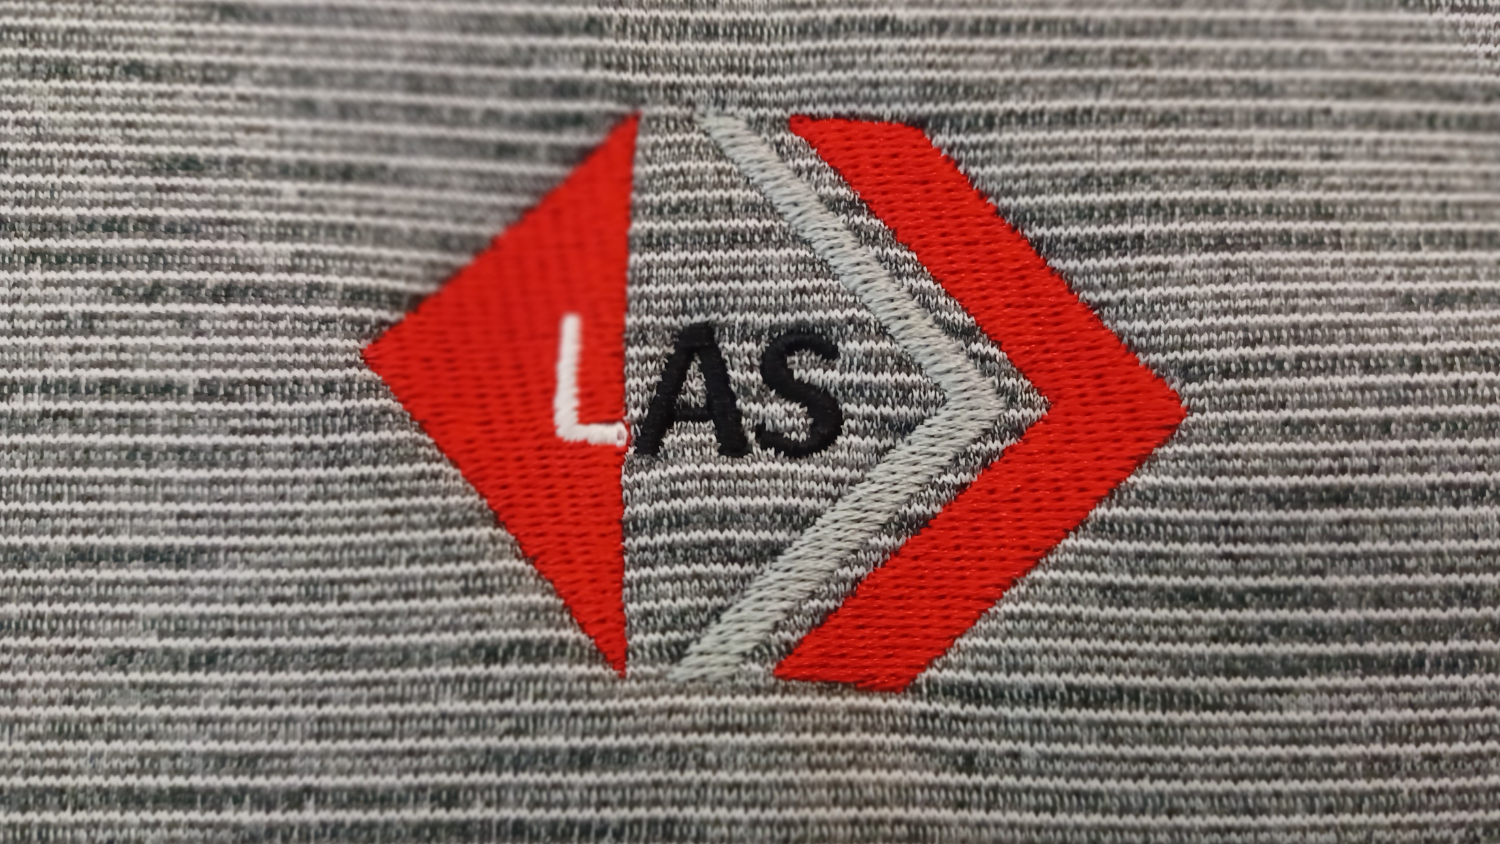 LAS logo on a sweater